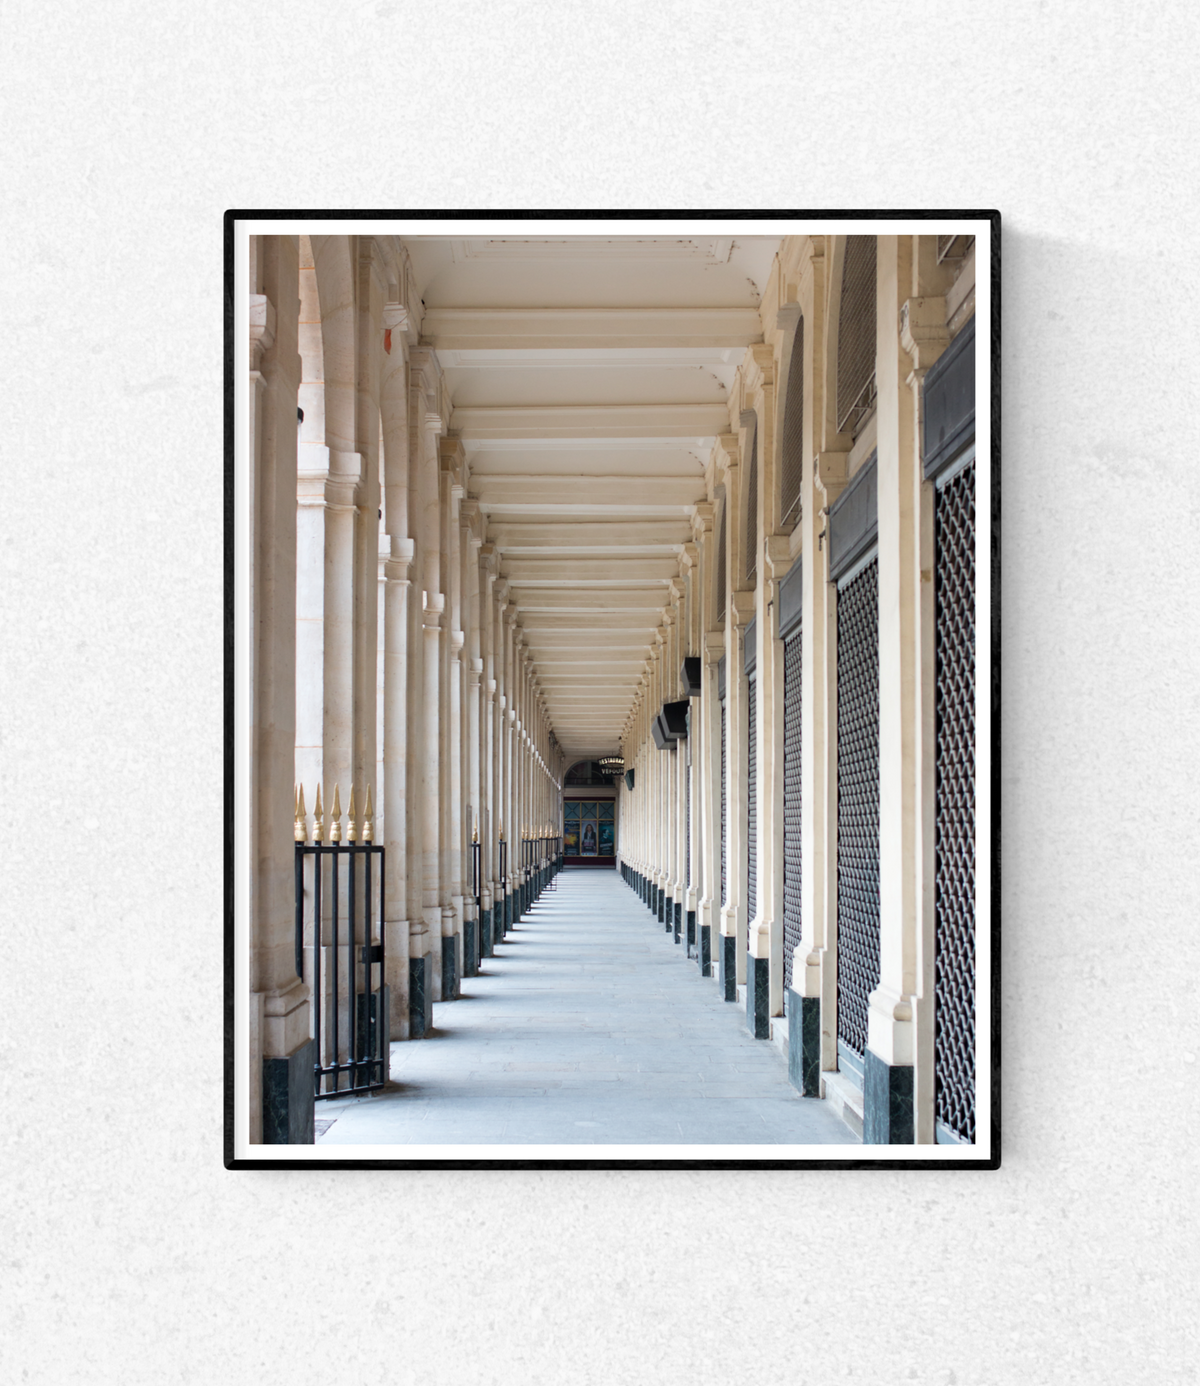 The Arcade of Palais Royal - Every Day Paris 